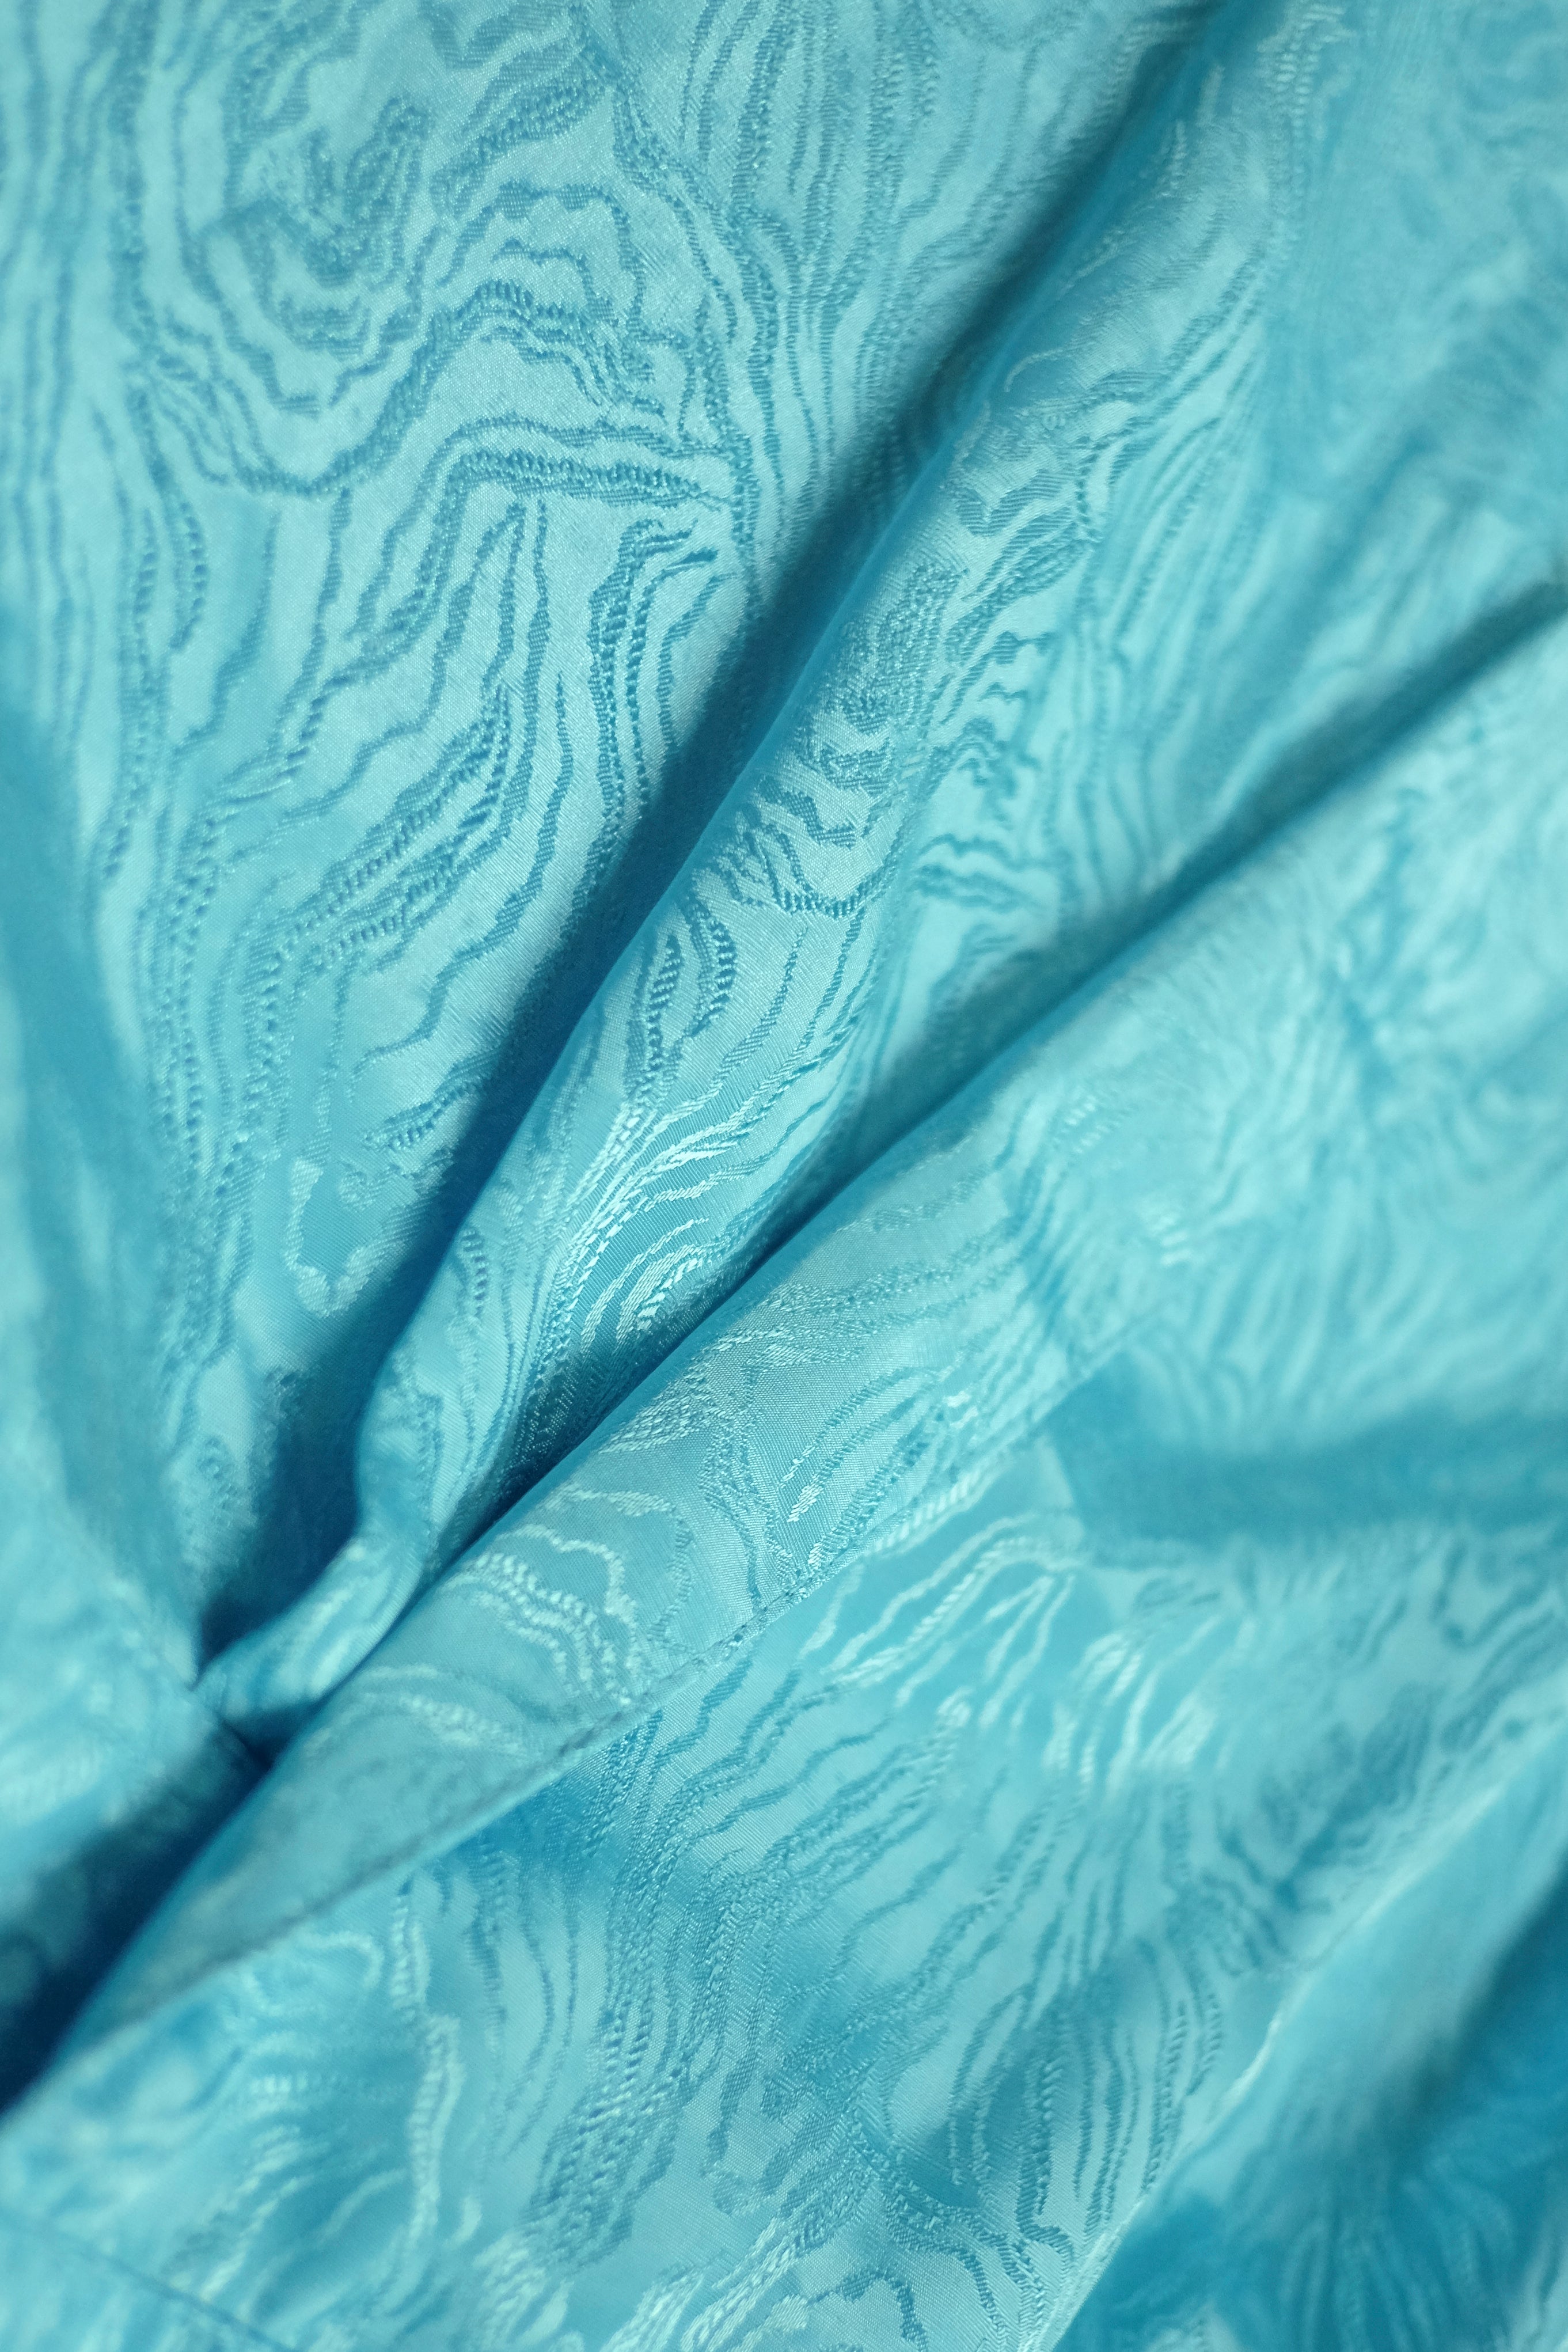 Vintage 80's Dress blue fabric detail